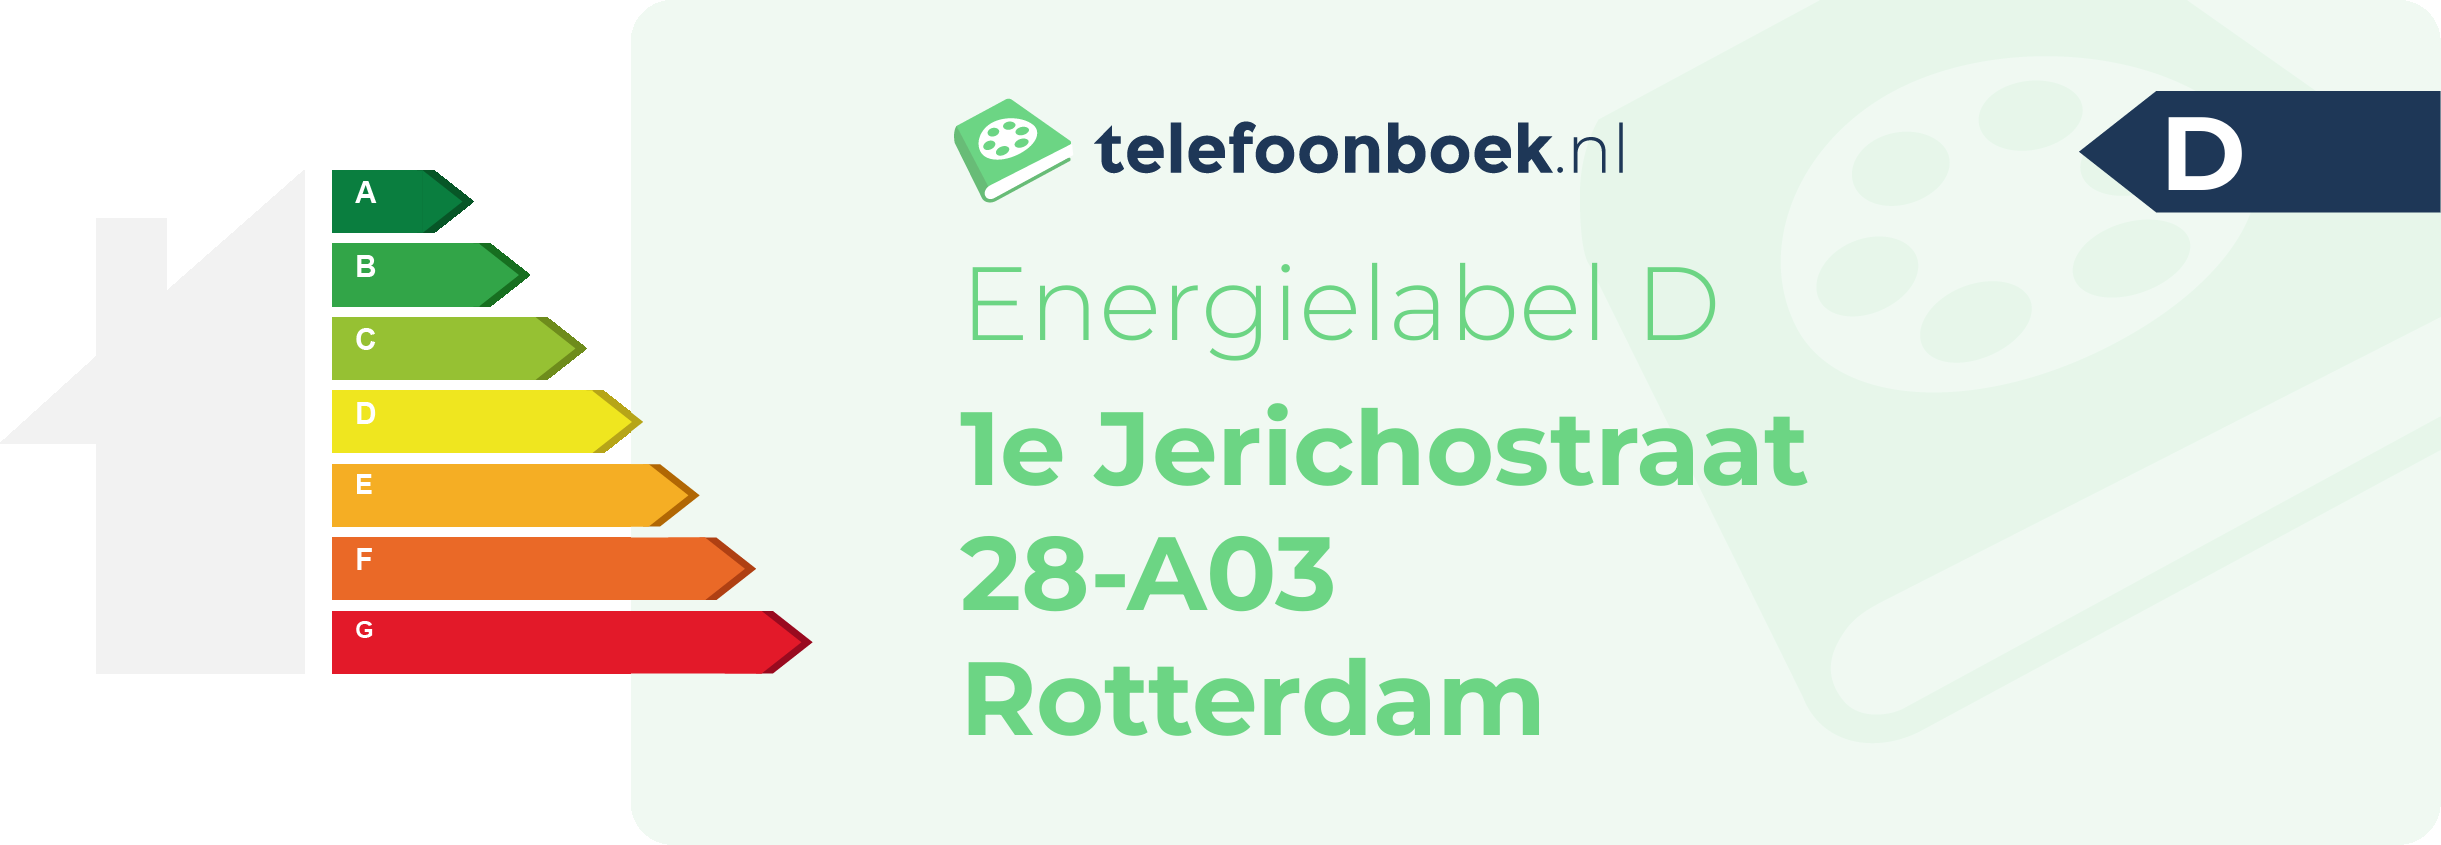 Energielabel 1e Jerichostraat 28-A03 Rotterdam